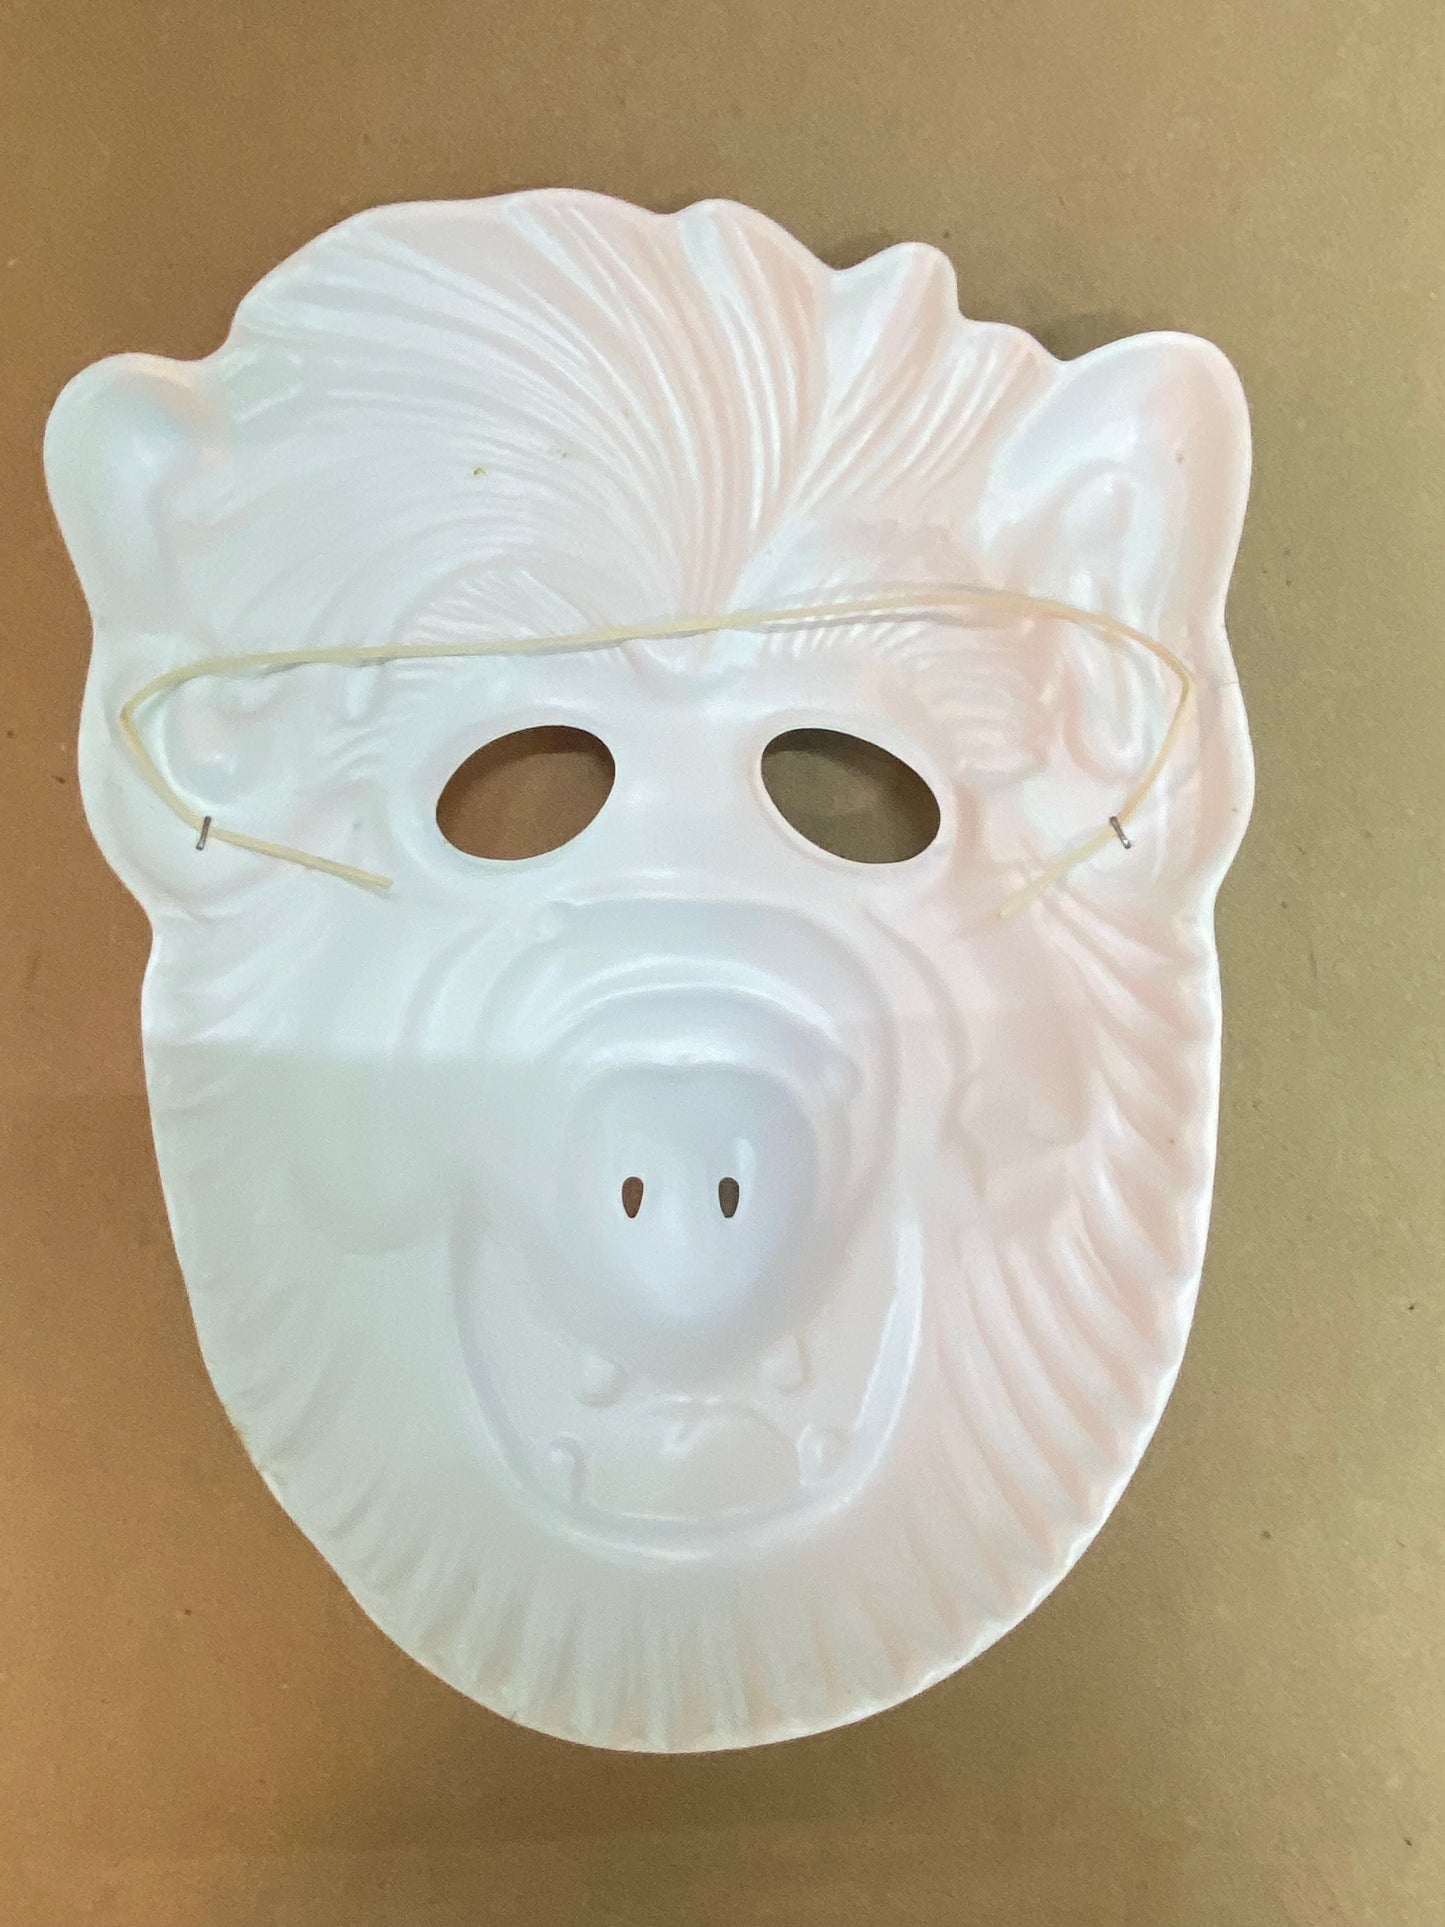 Original ALF costume with Mask